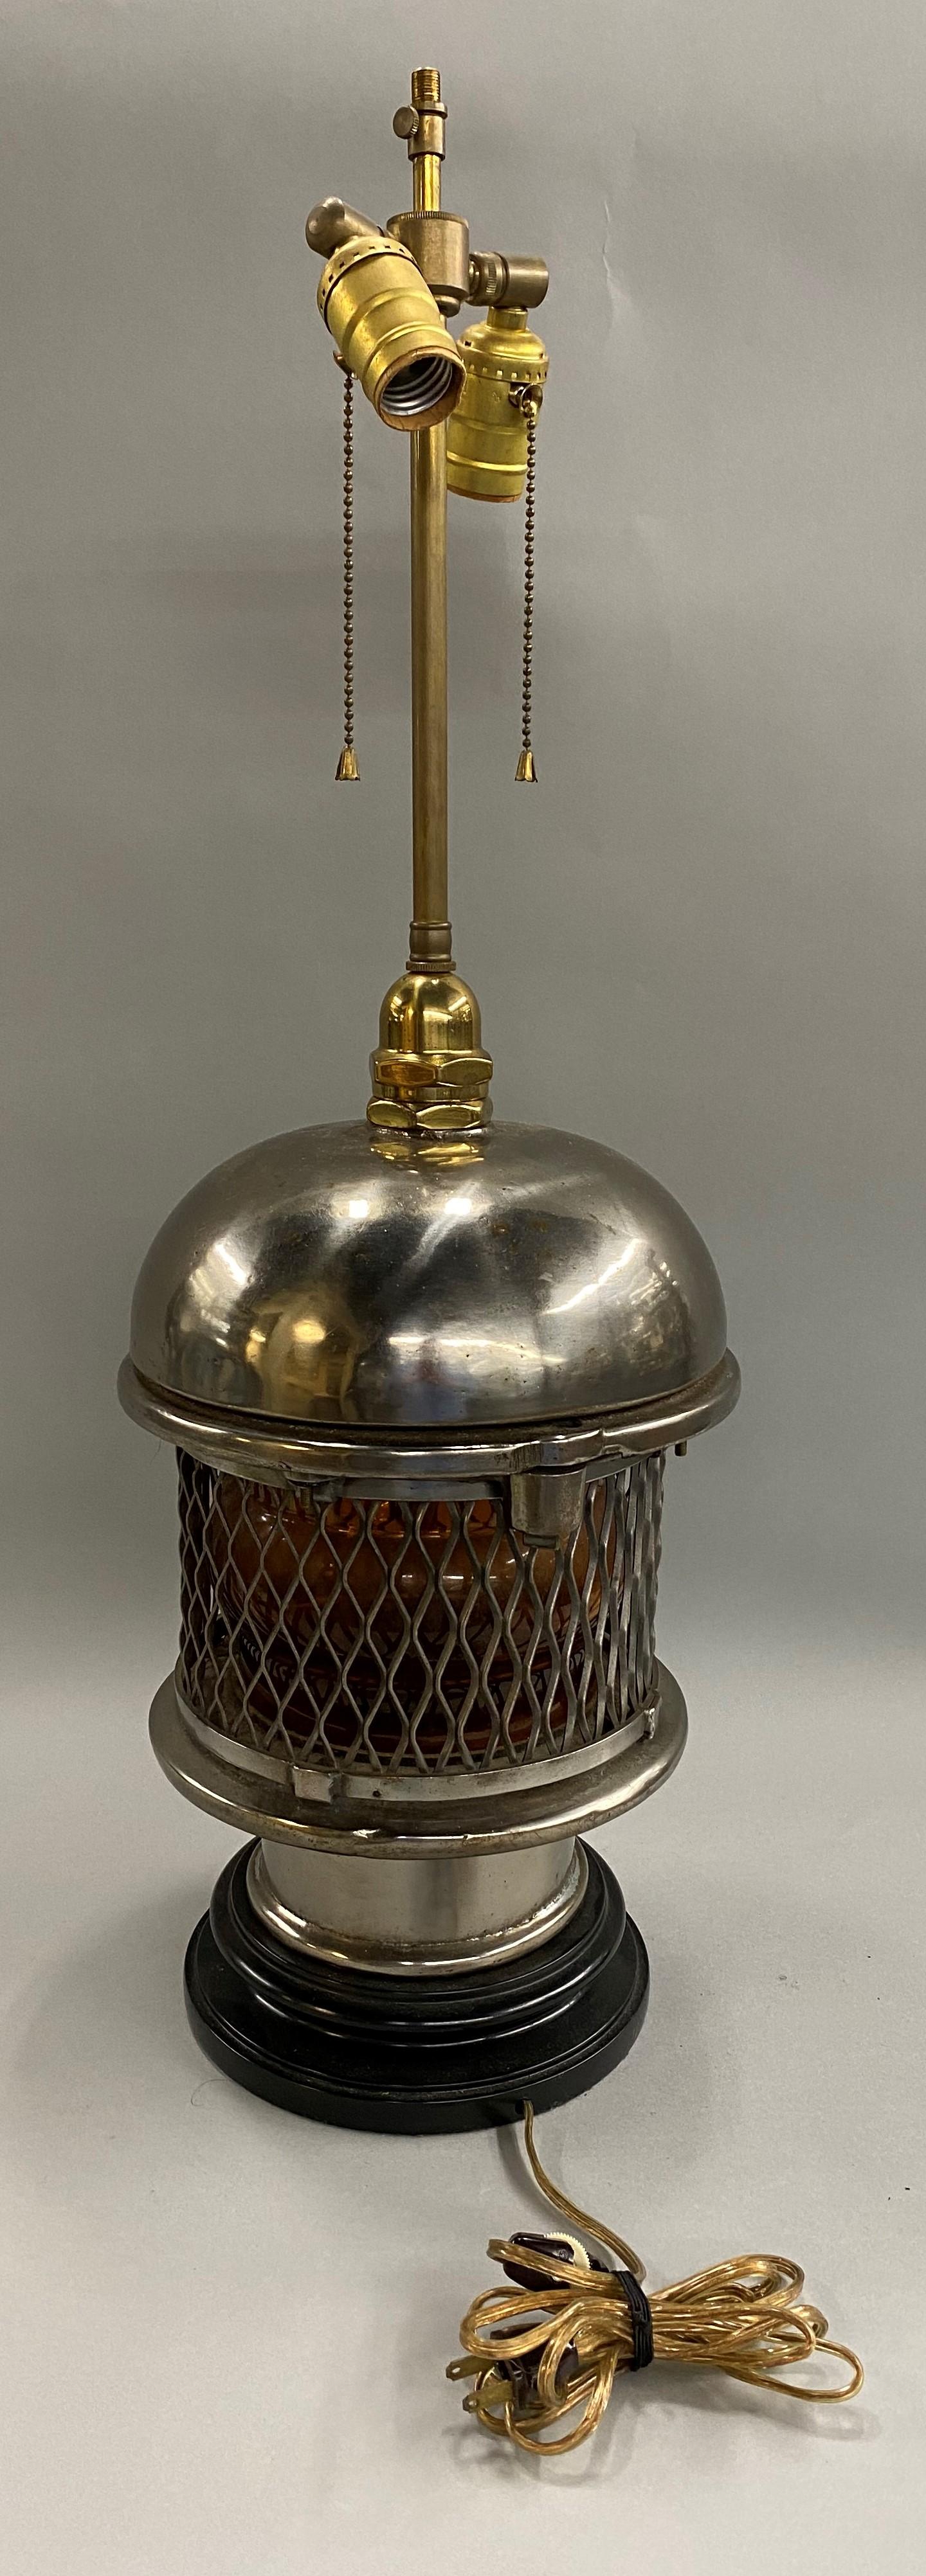 Glass Chrome Top Nautical Ship’s Lantern Converted Table Lamp, circa 1930s